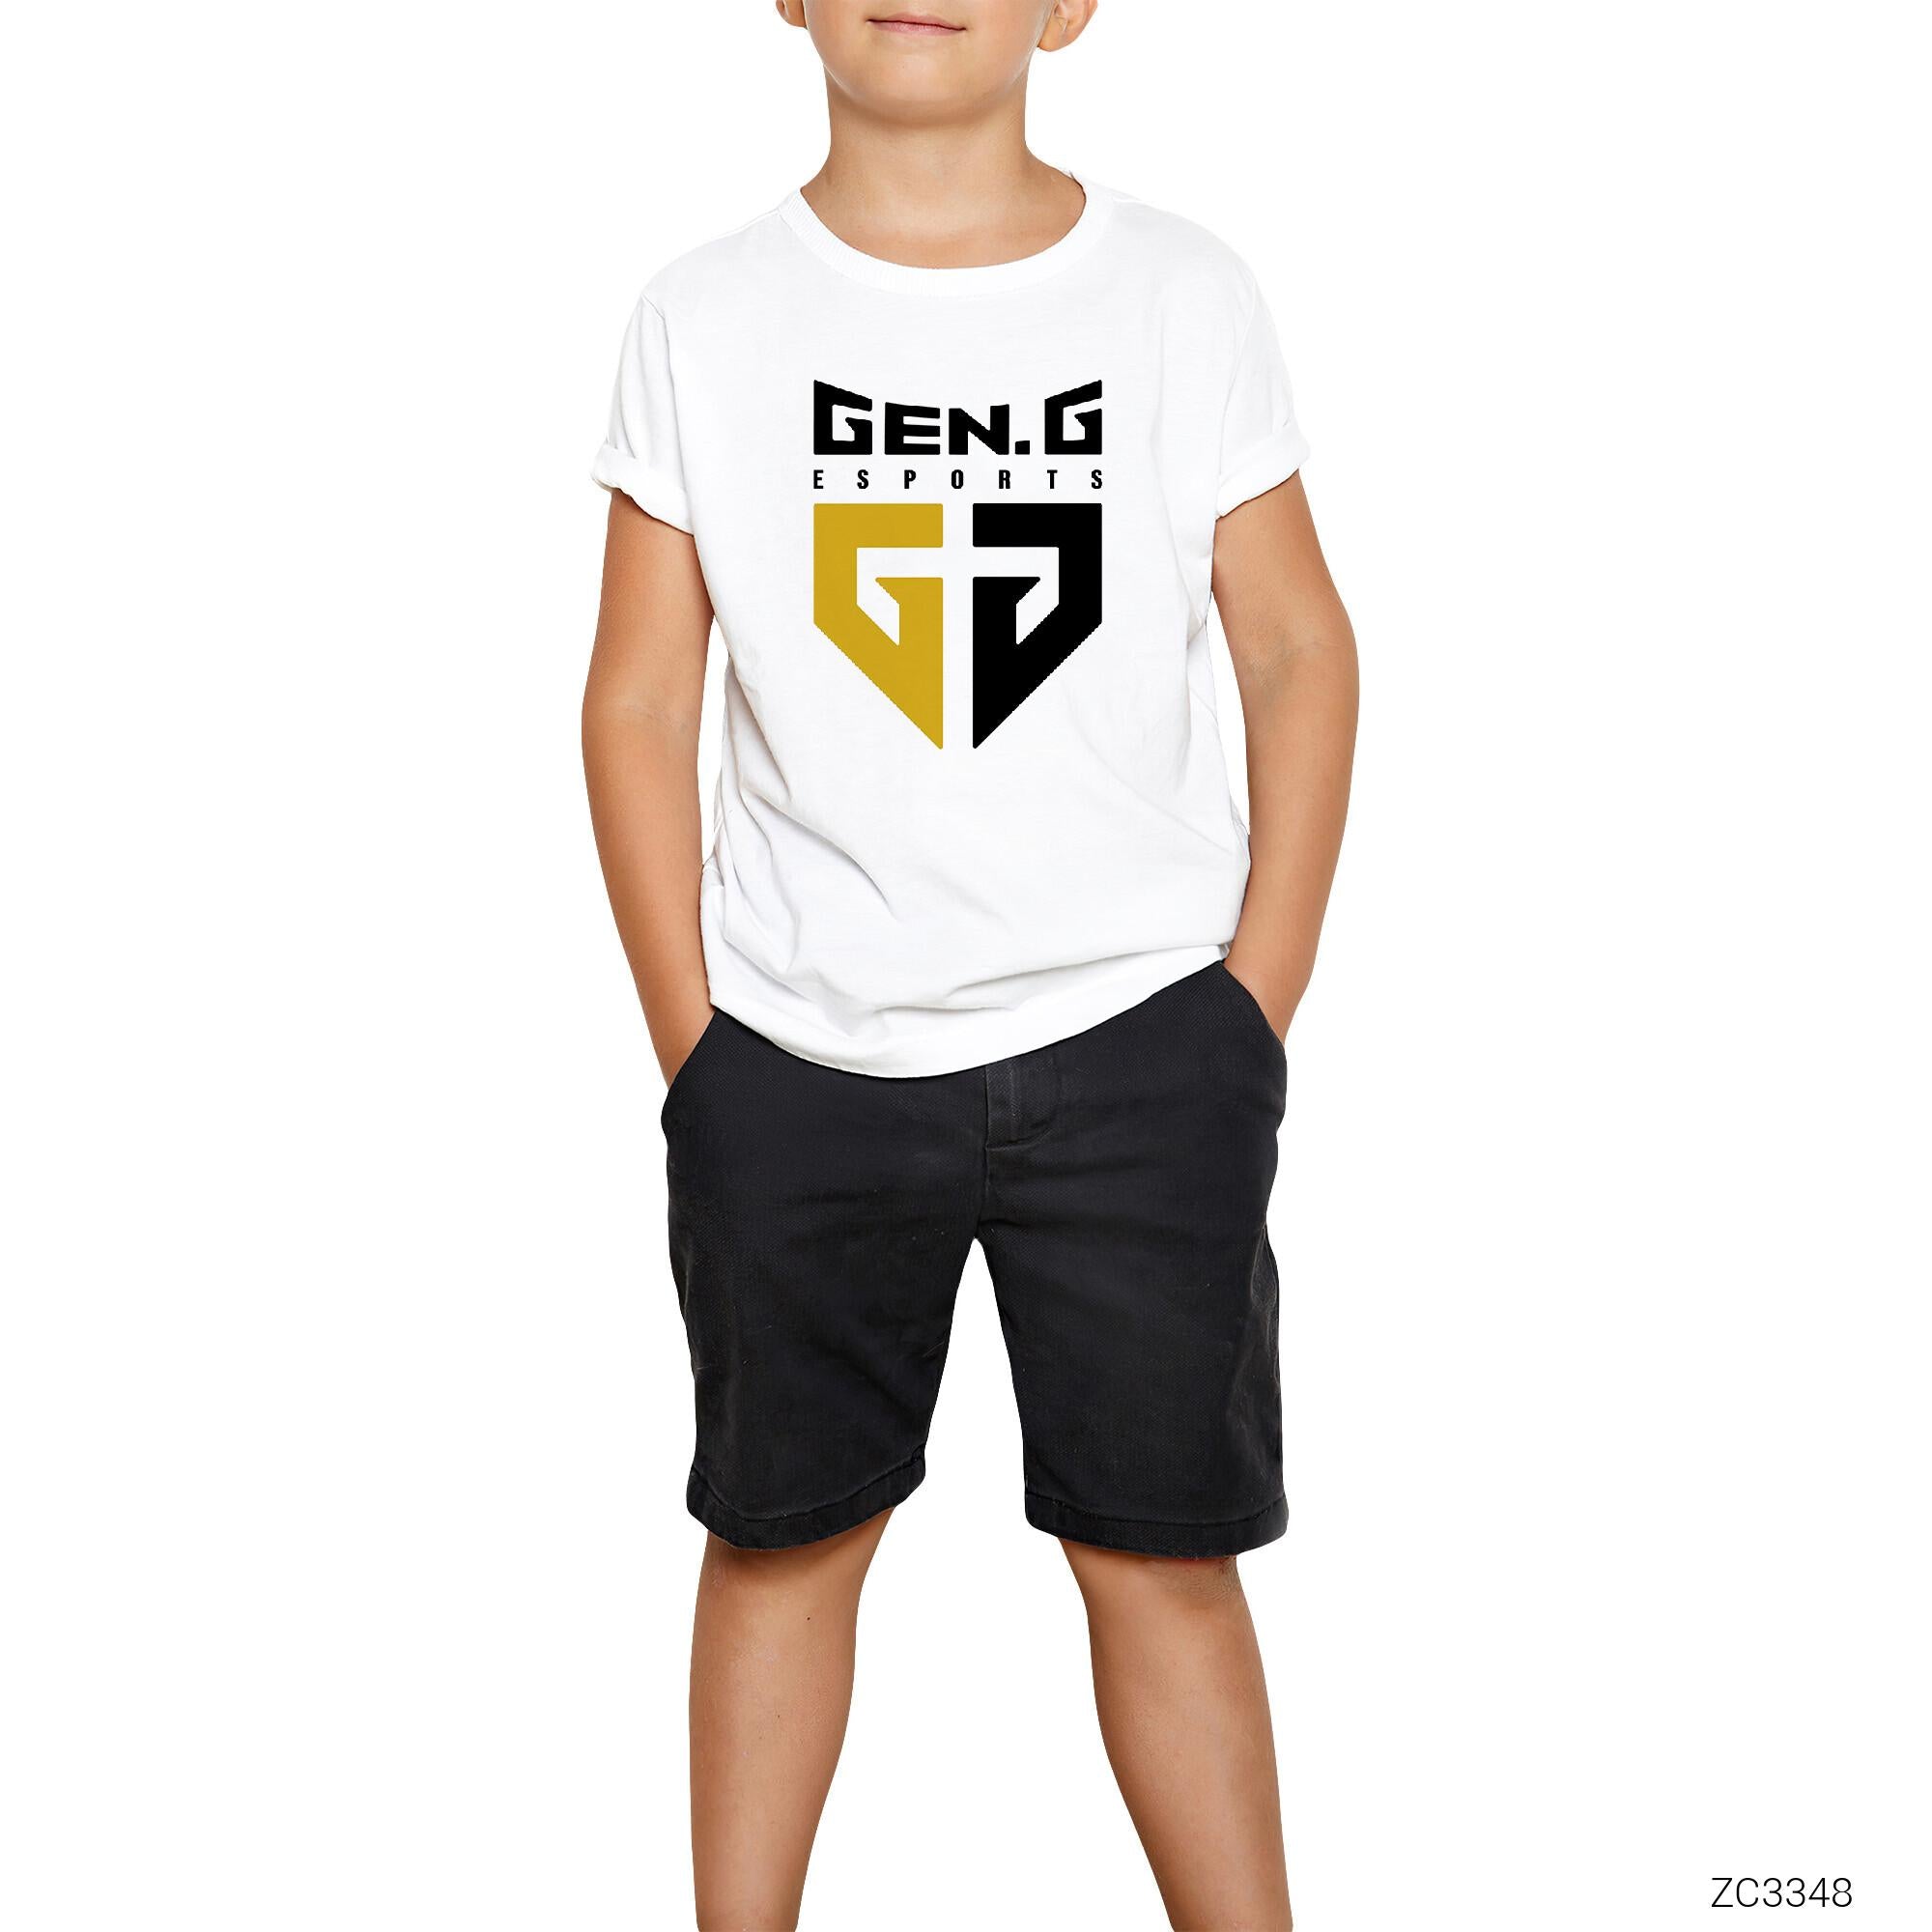 GEN.G Esports Beyaz Çocuk Tişört